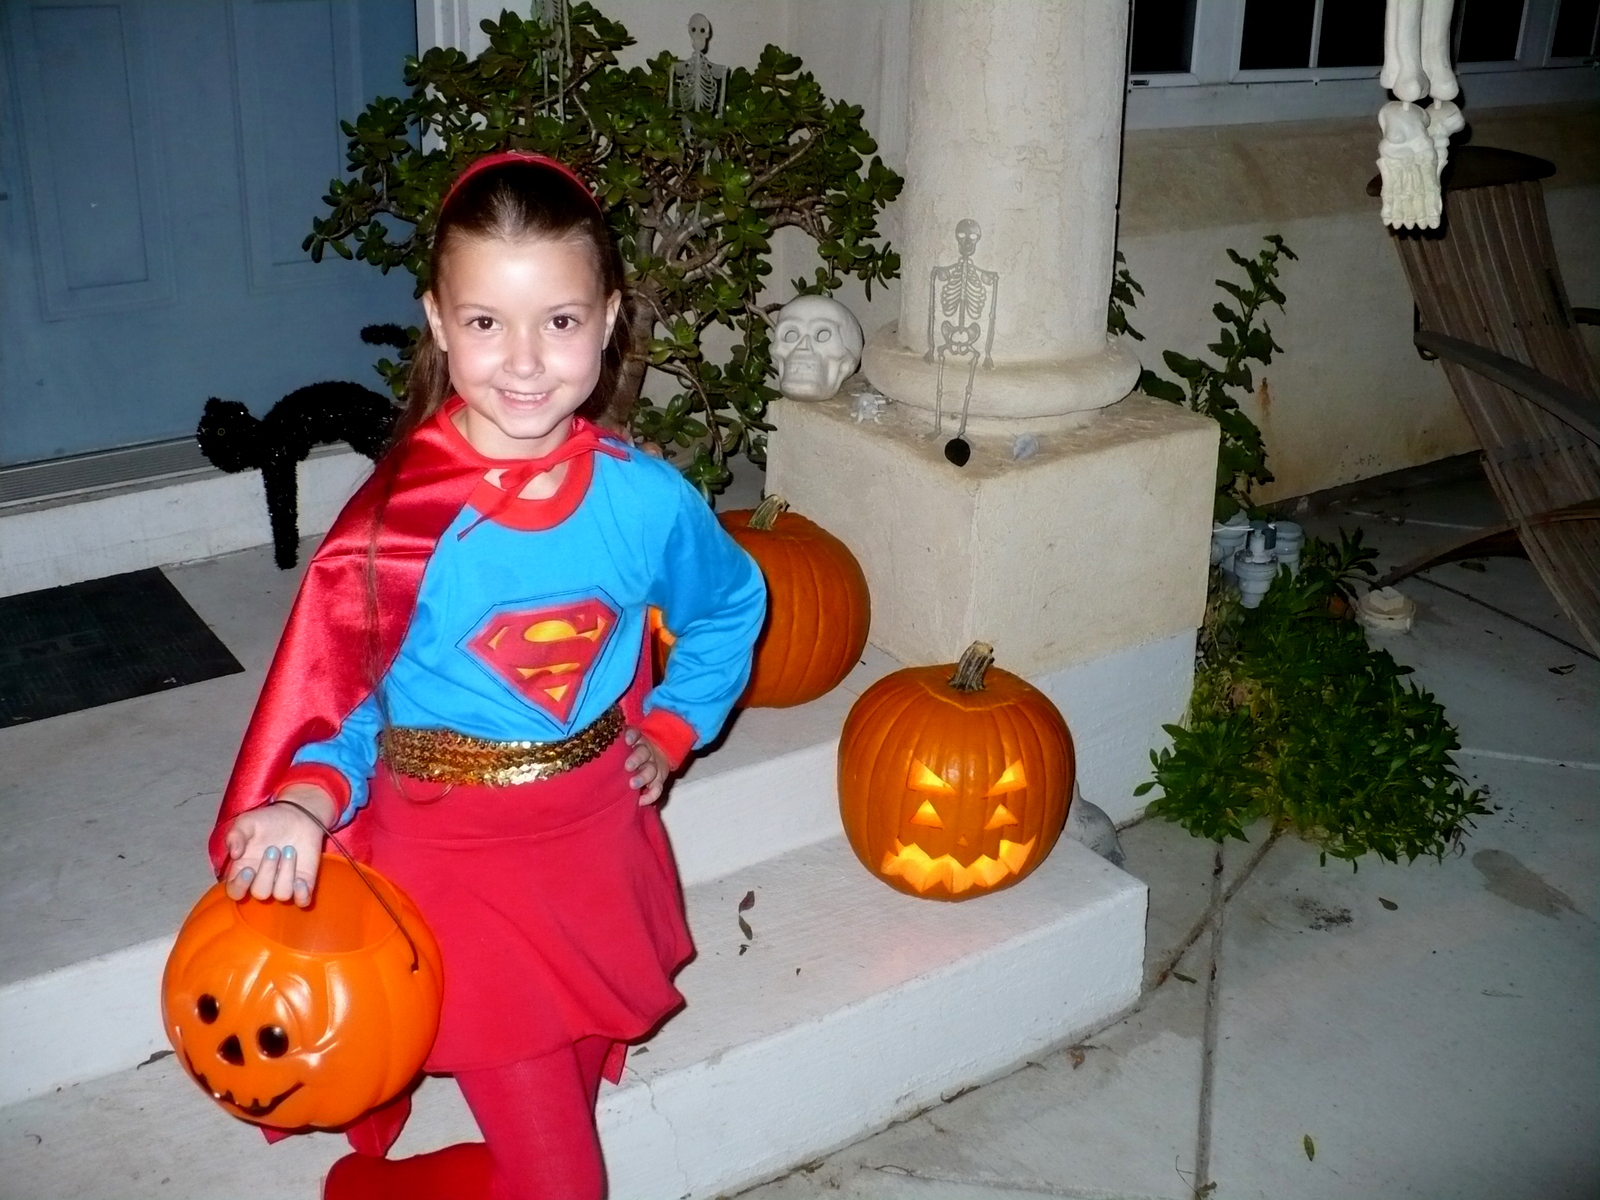 a little girl in a costume holding a pumpkin